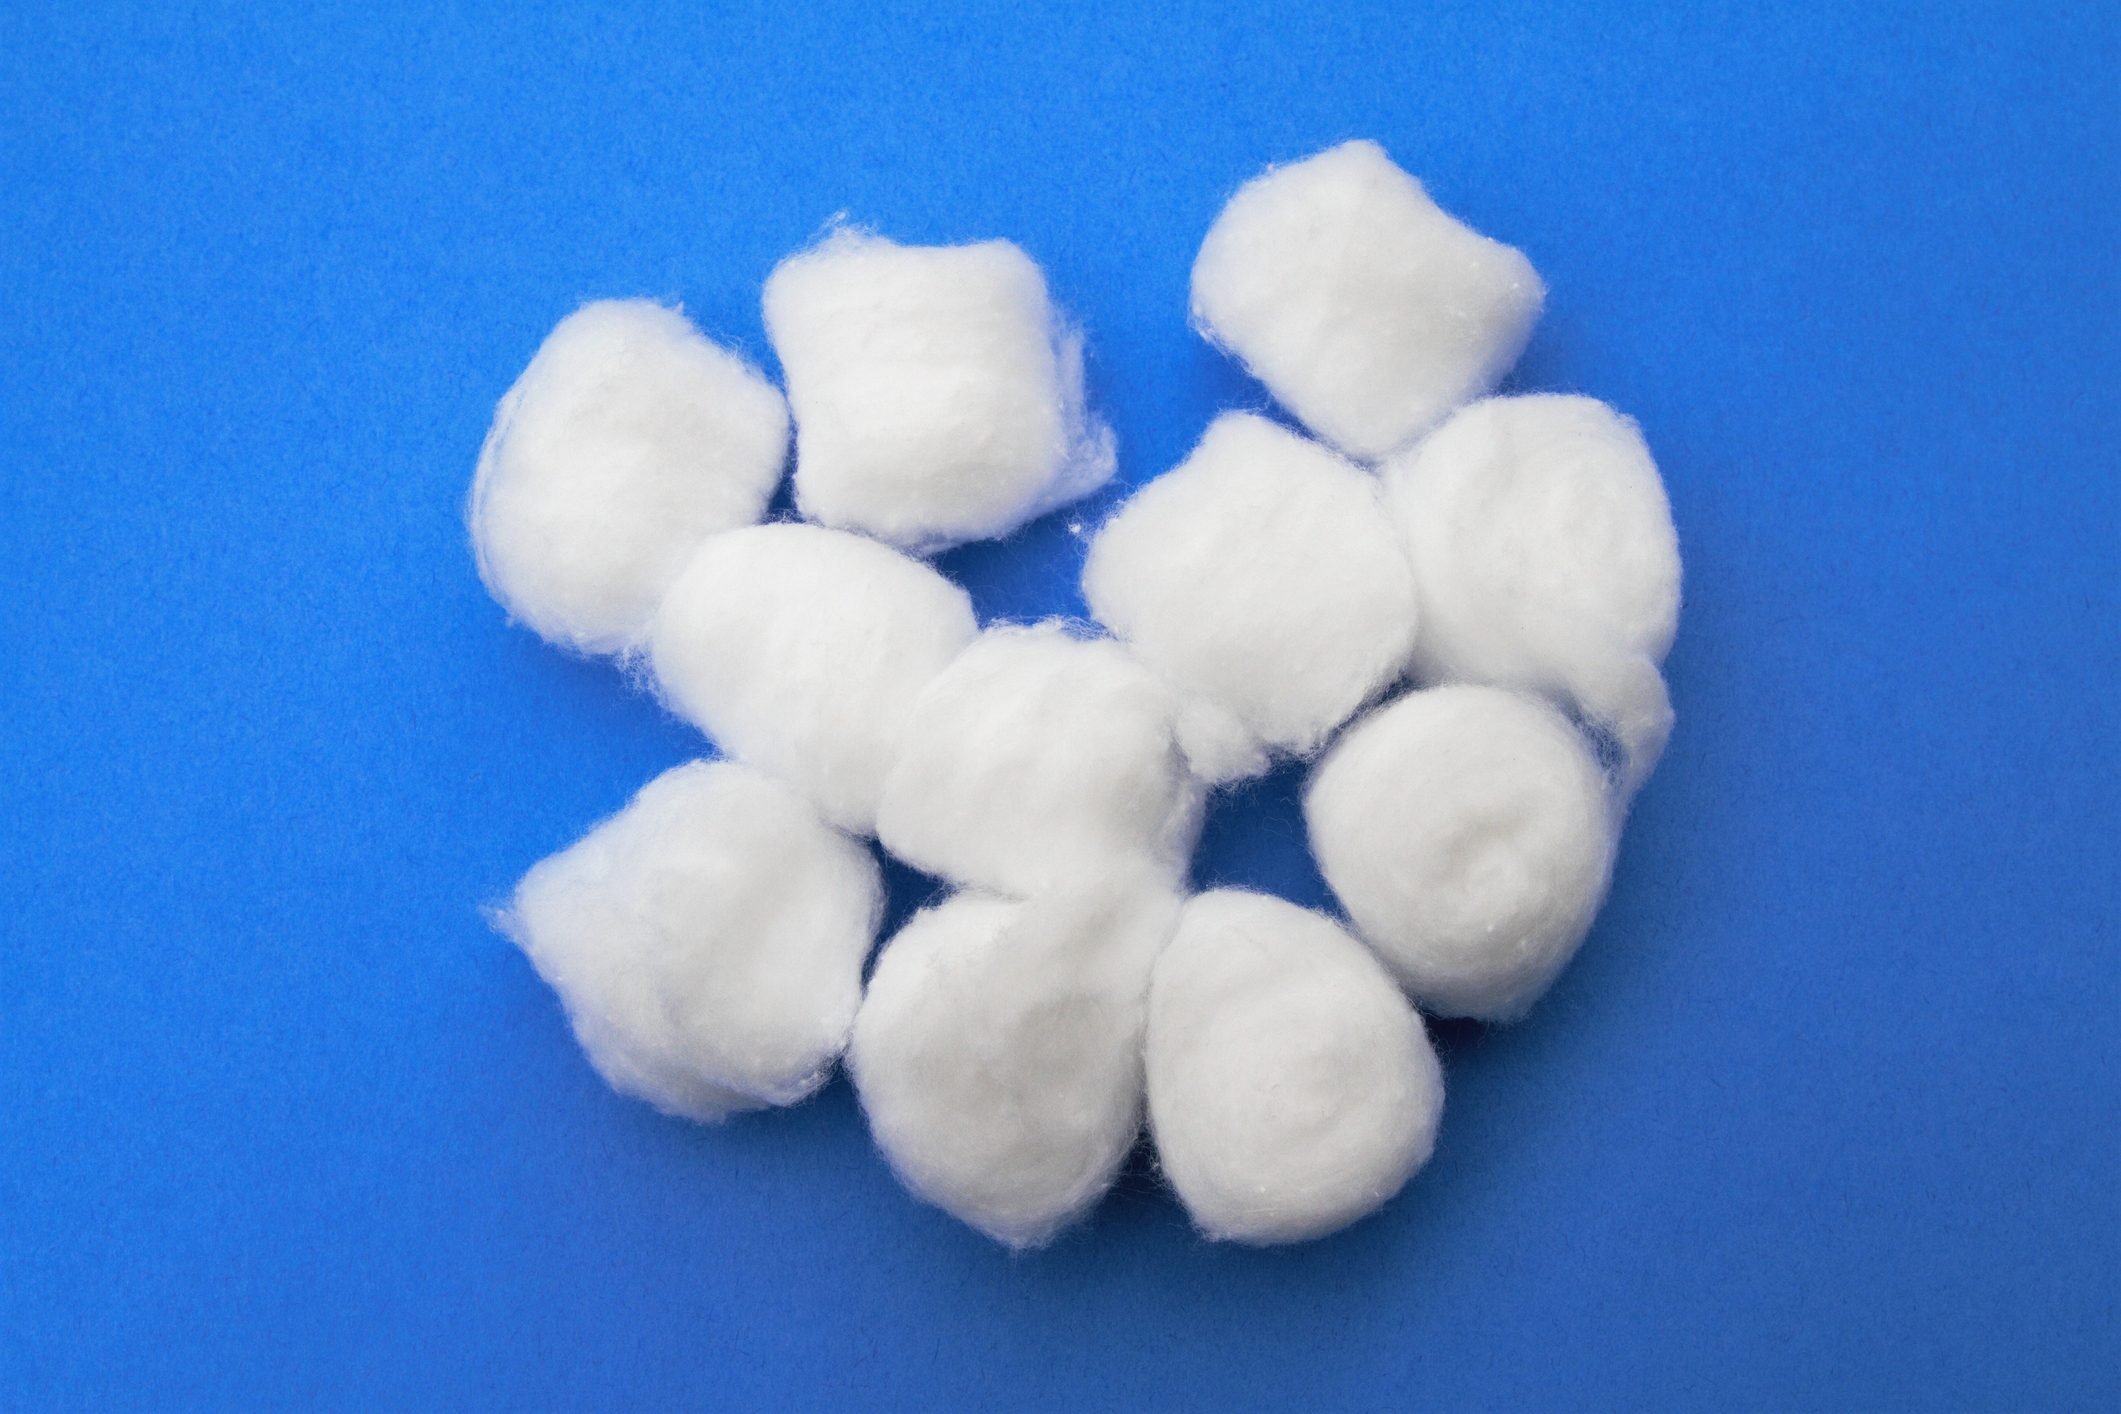 Cotton Balls Jumbo Size for Facial Treatments, Nails and Make-Up